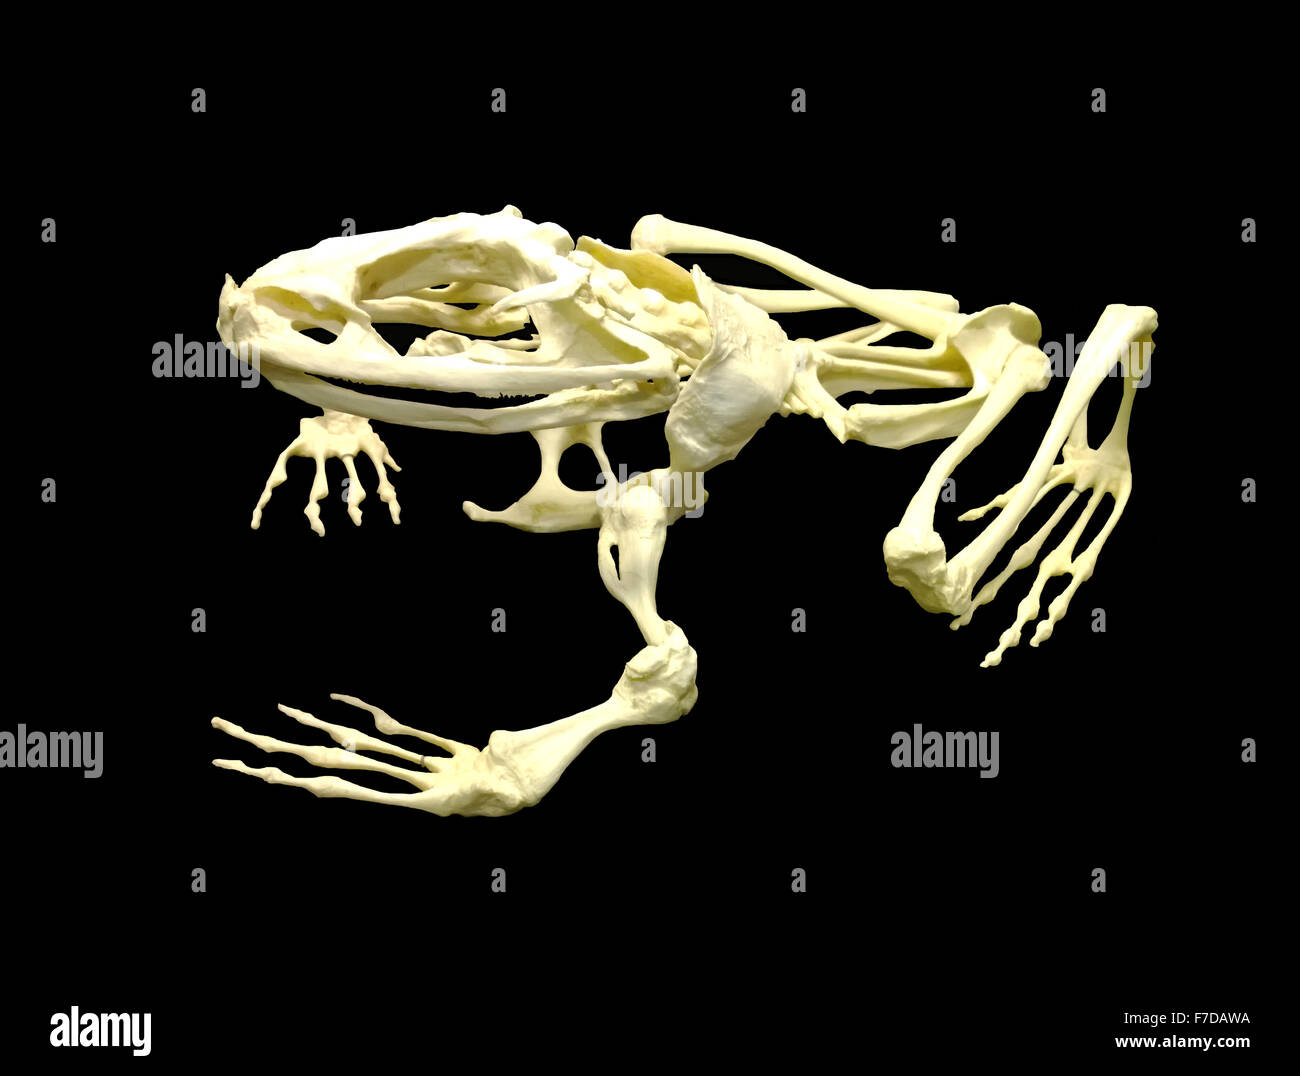 frog skeleton on black background Stock Photo